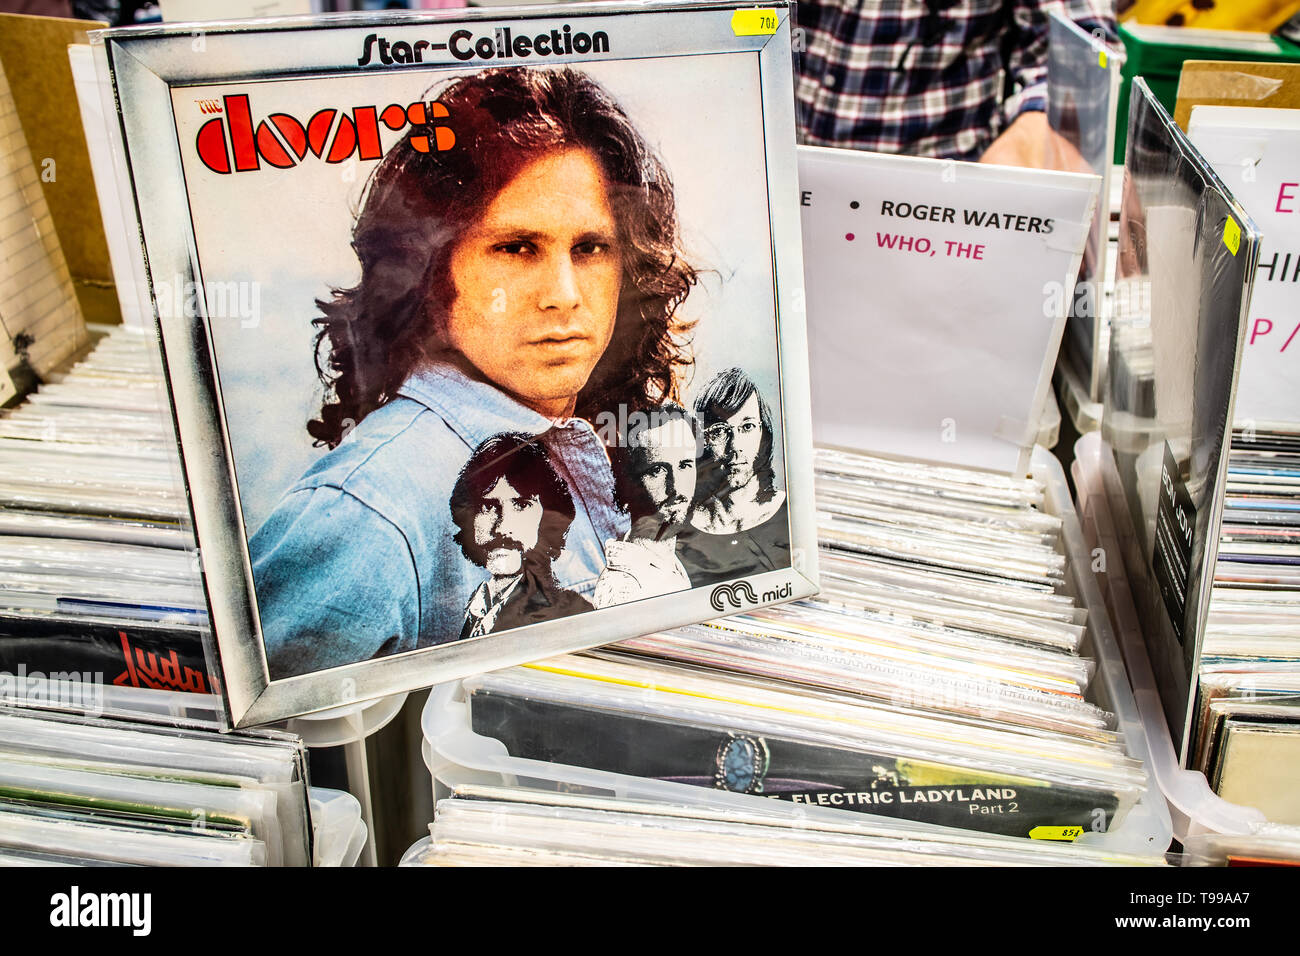 Nadarzyn, Poland, May 11, 2019 The Doors vinyl album on display for sale, Vinyl, LP, Album, Rock, American rock band, collection of Vinyls Stock Photo